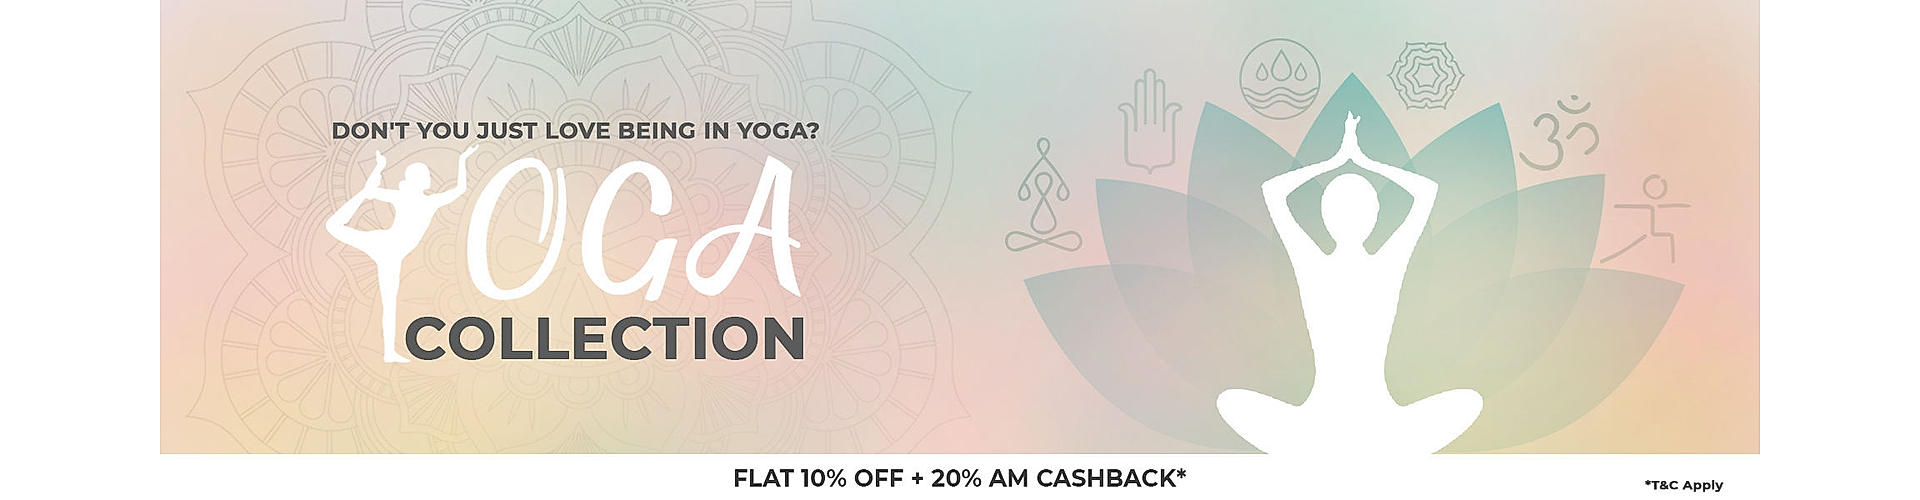 Yoga Collection